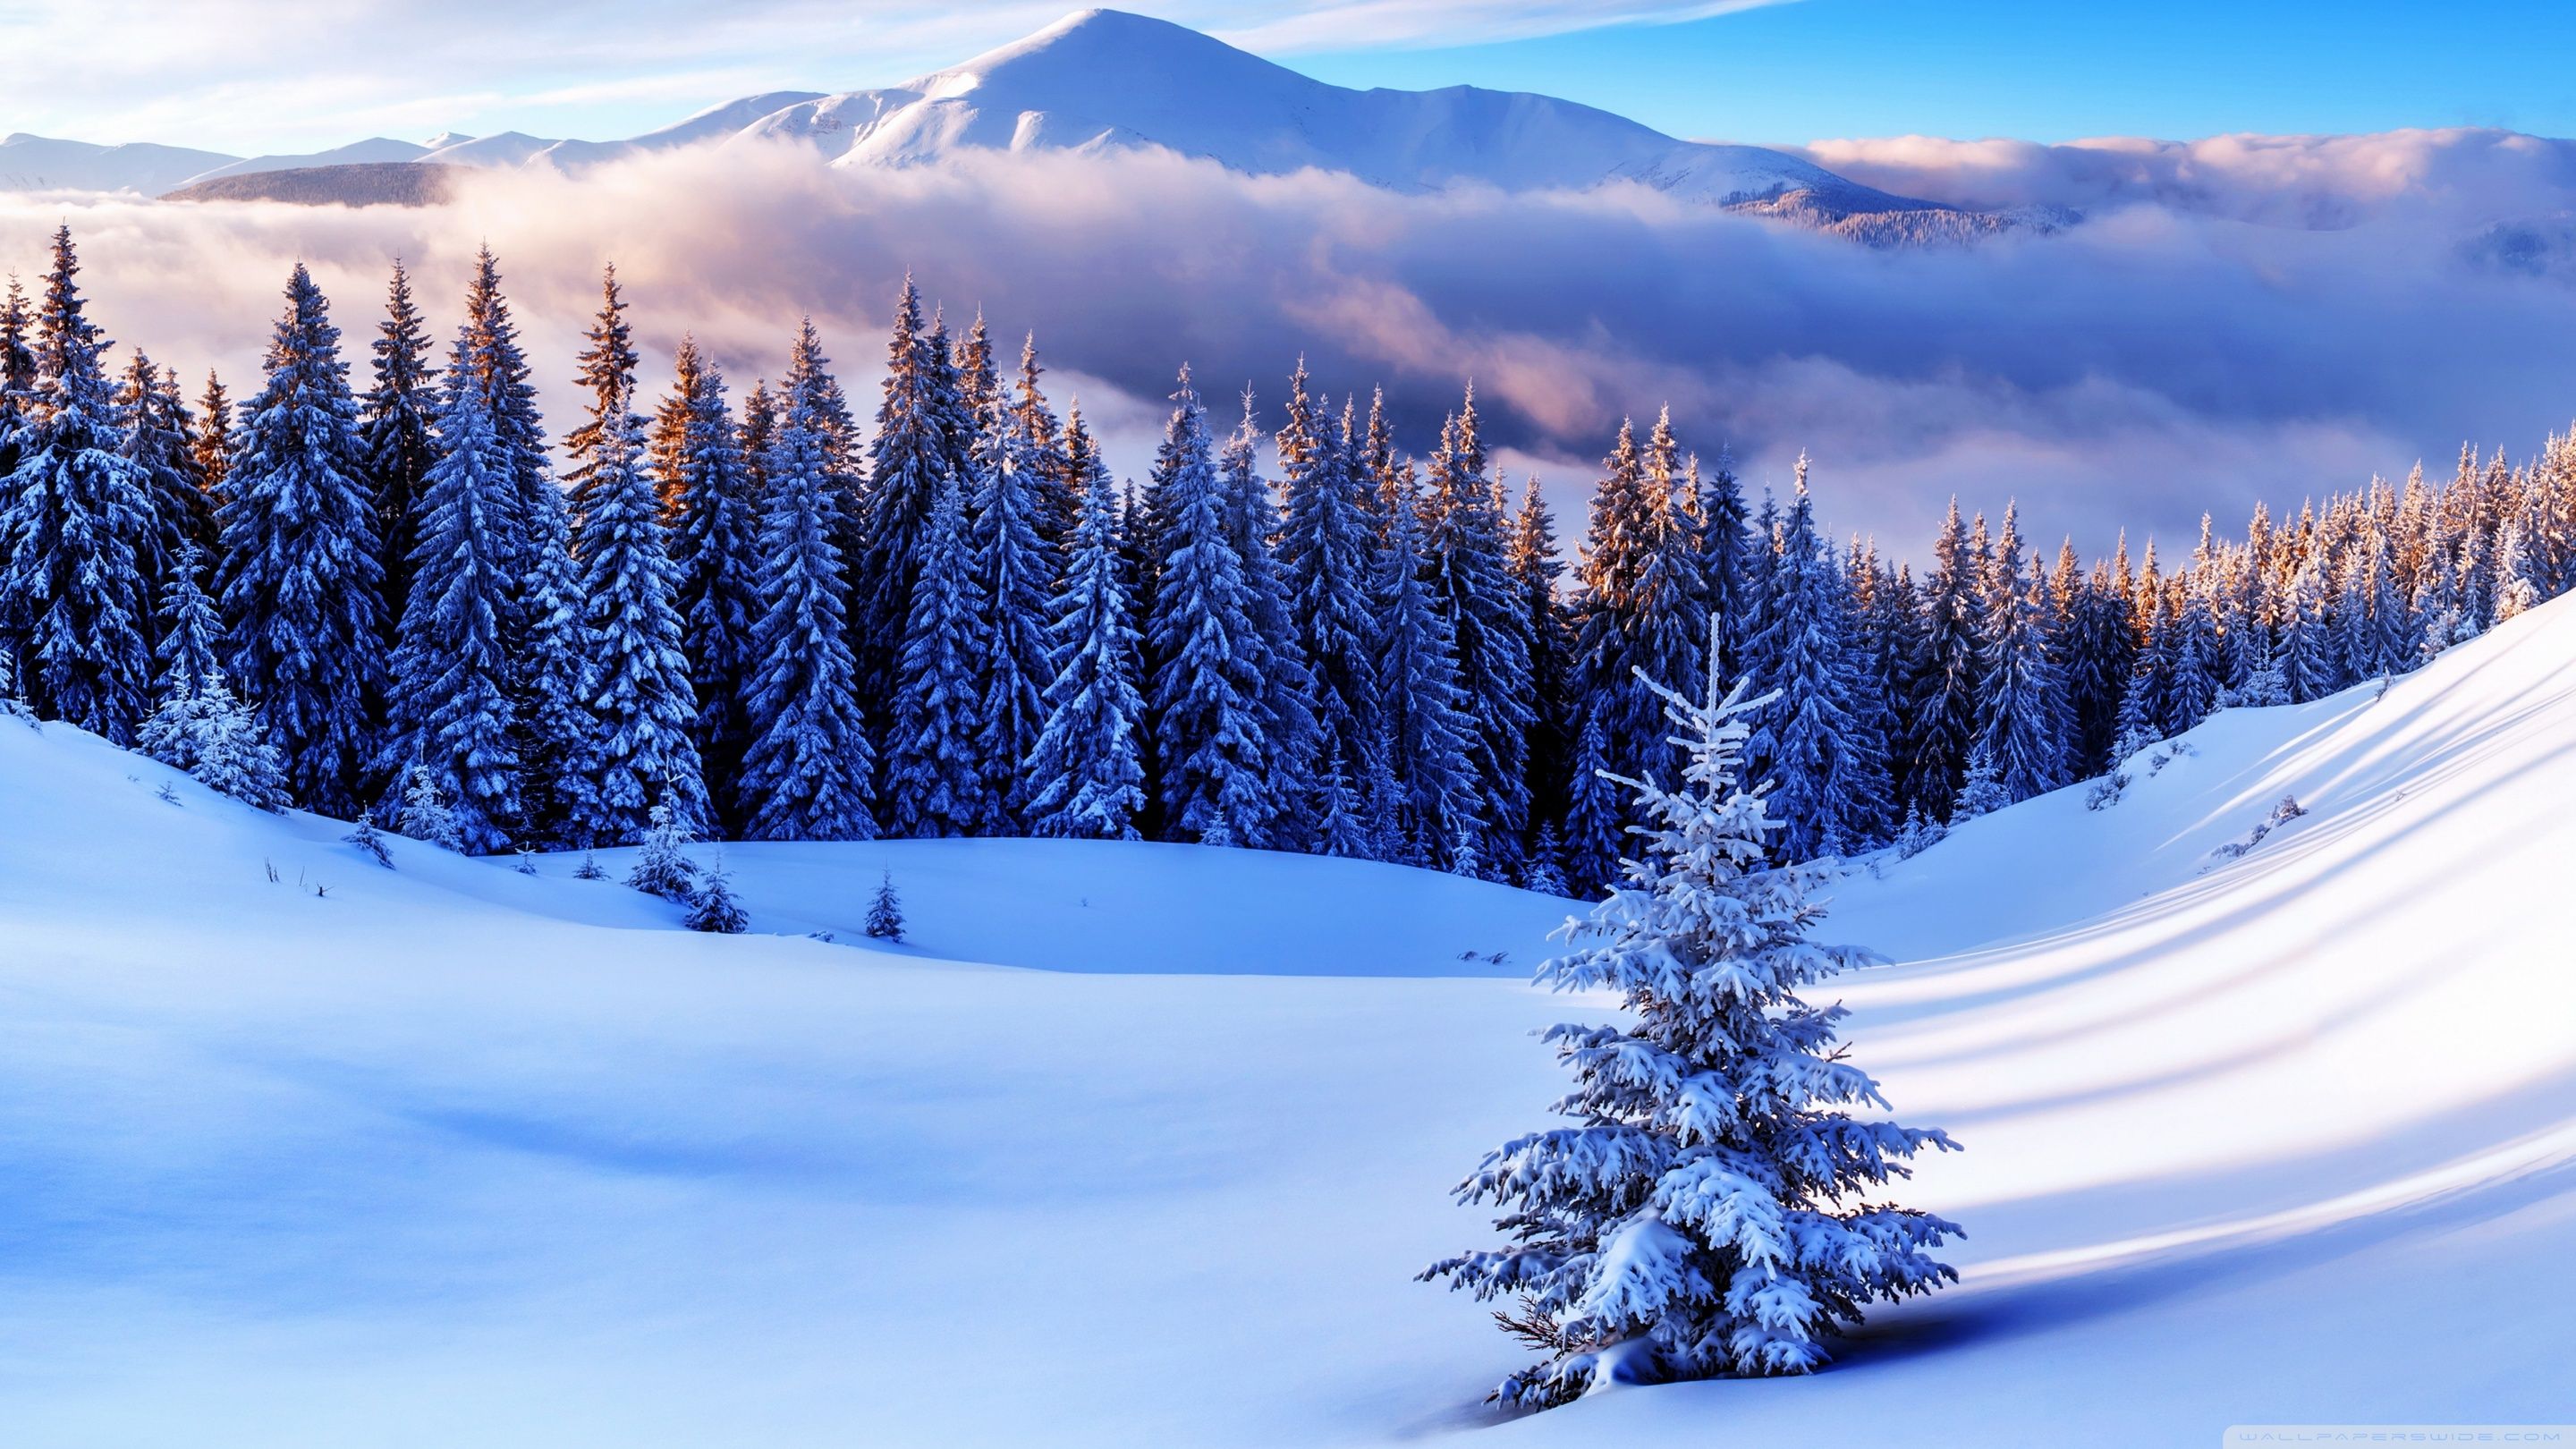 Winter Season, Mountains Ultra HD Desktop Background Wallpaper for 4K UHD TV, Widescreen & UltraWide Desktop & Laptop, Multi Display, Dual Monitor, Tablet